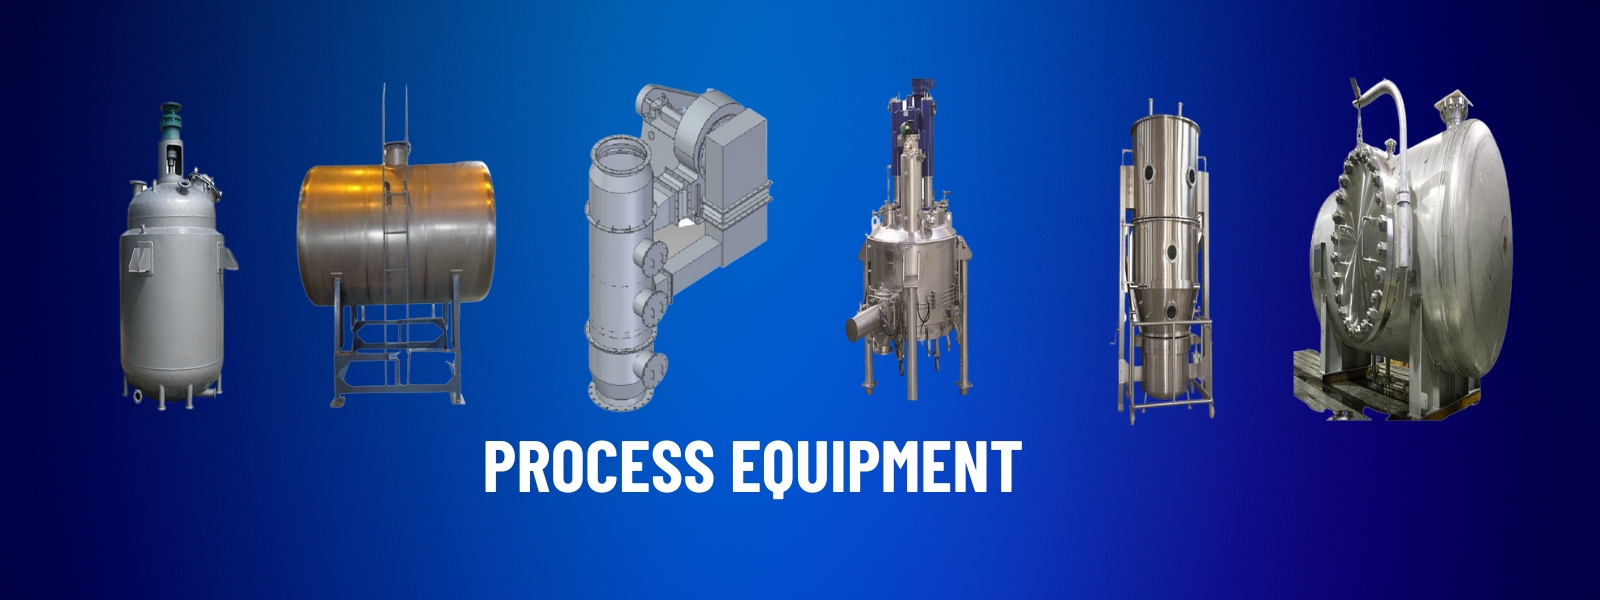 Process Equipment manufacturers